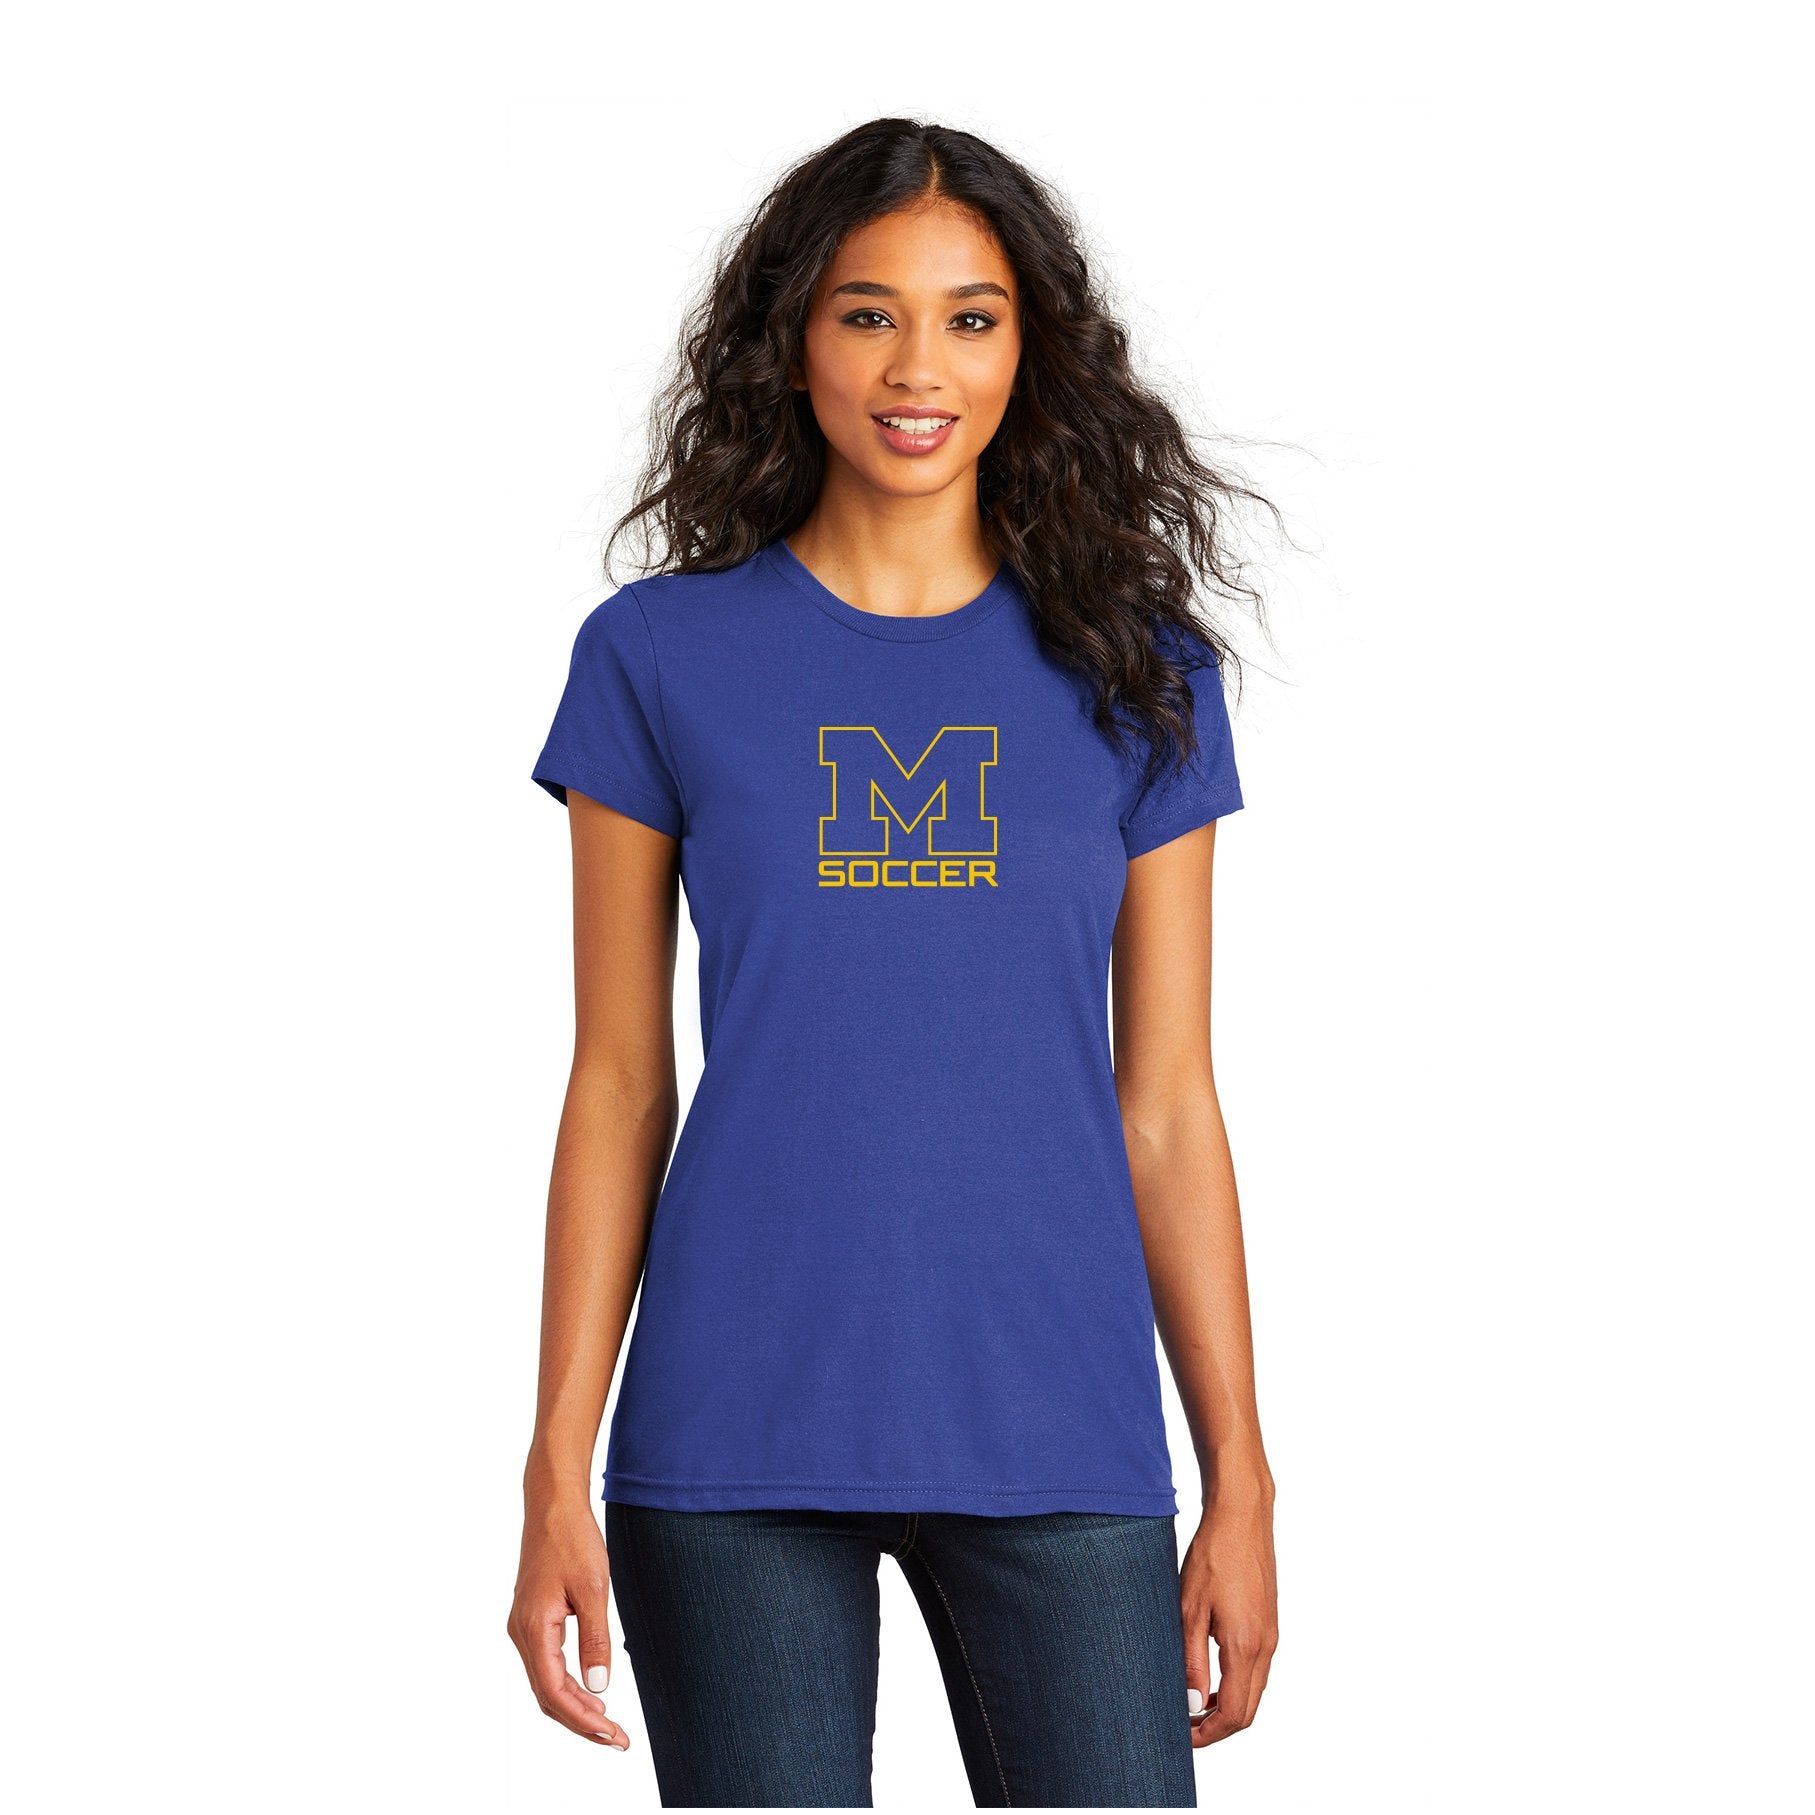 Mira Mesa Soccer Women's Tee - Royal Blue